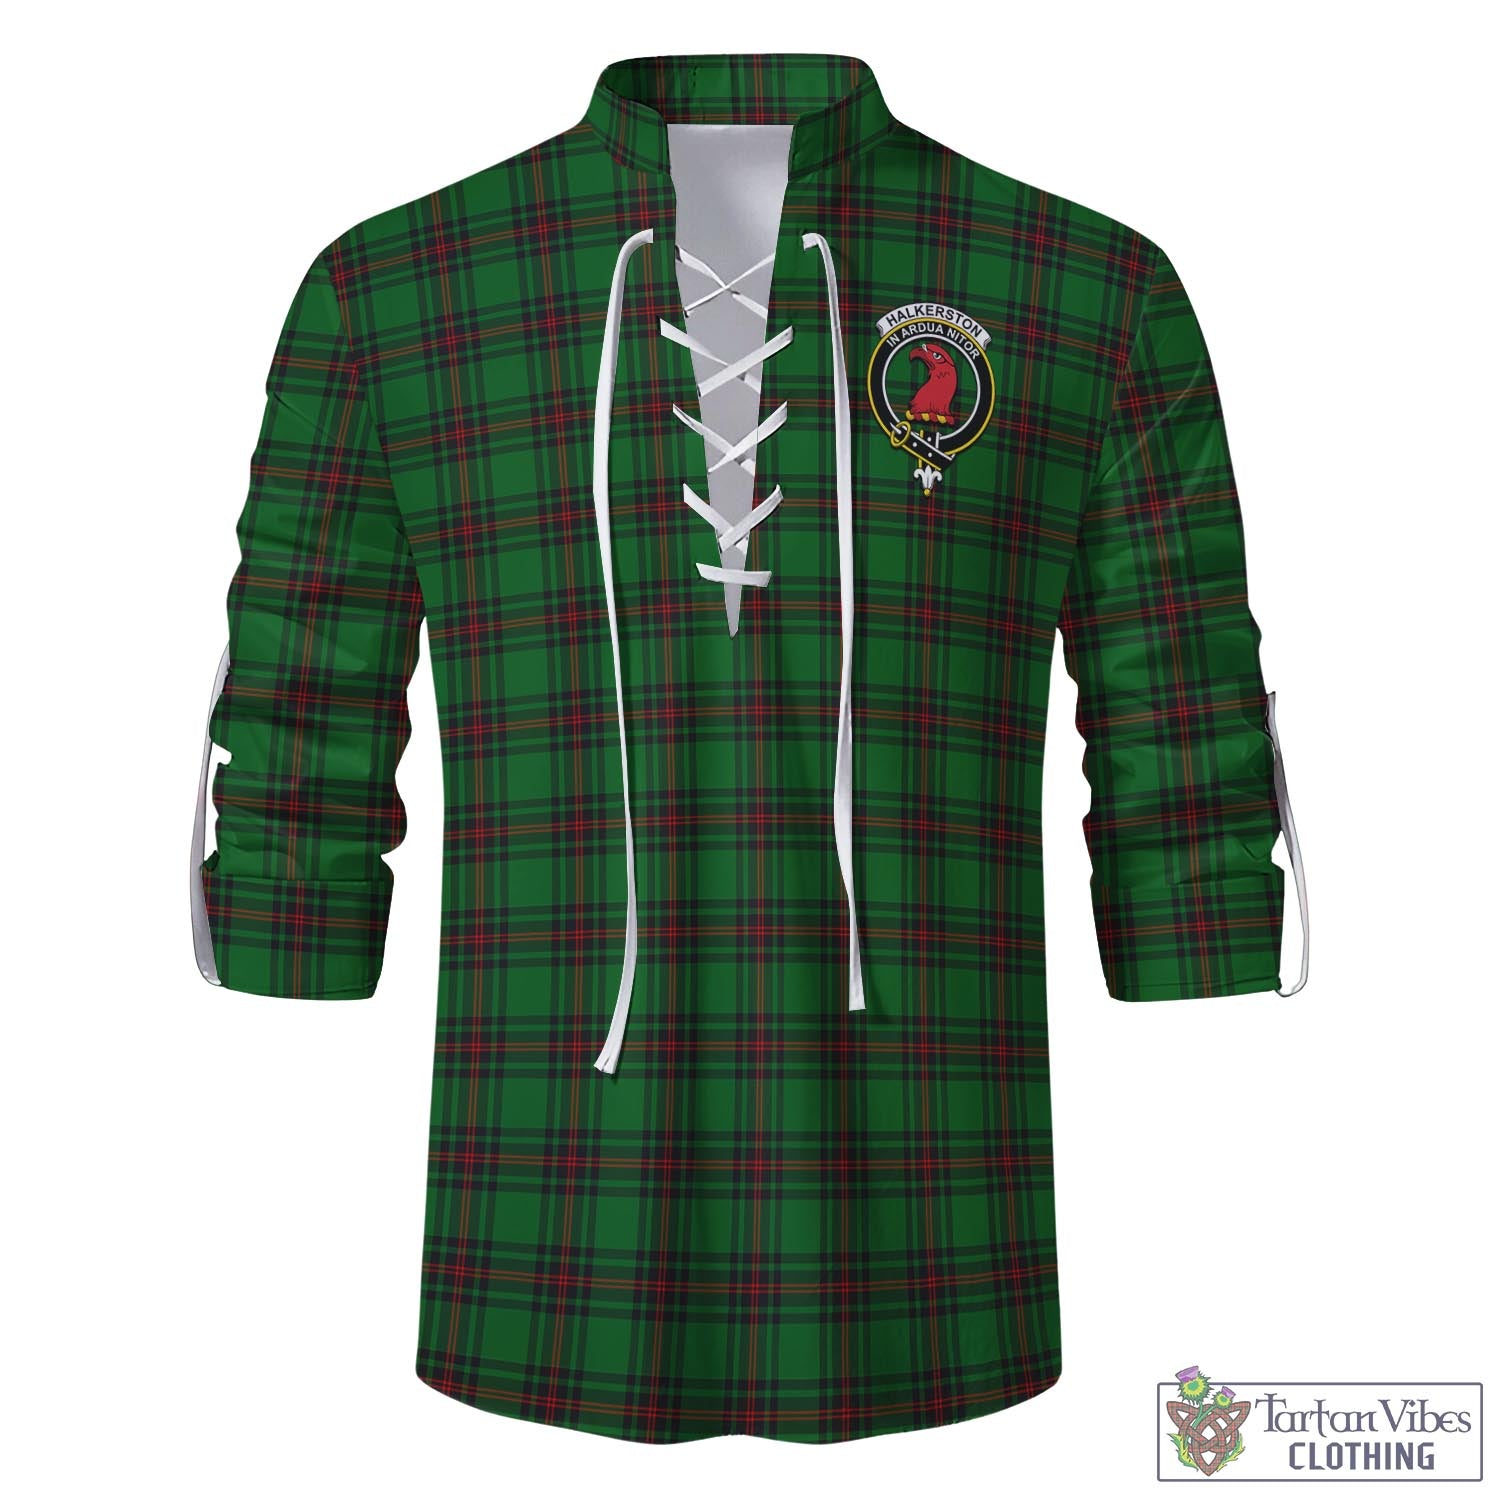 Tartan Vibes Clothing Halkerston Tartan Men's Scottish Traditional Jacobite Ghillie Kilt Shirt with Family Crest